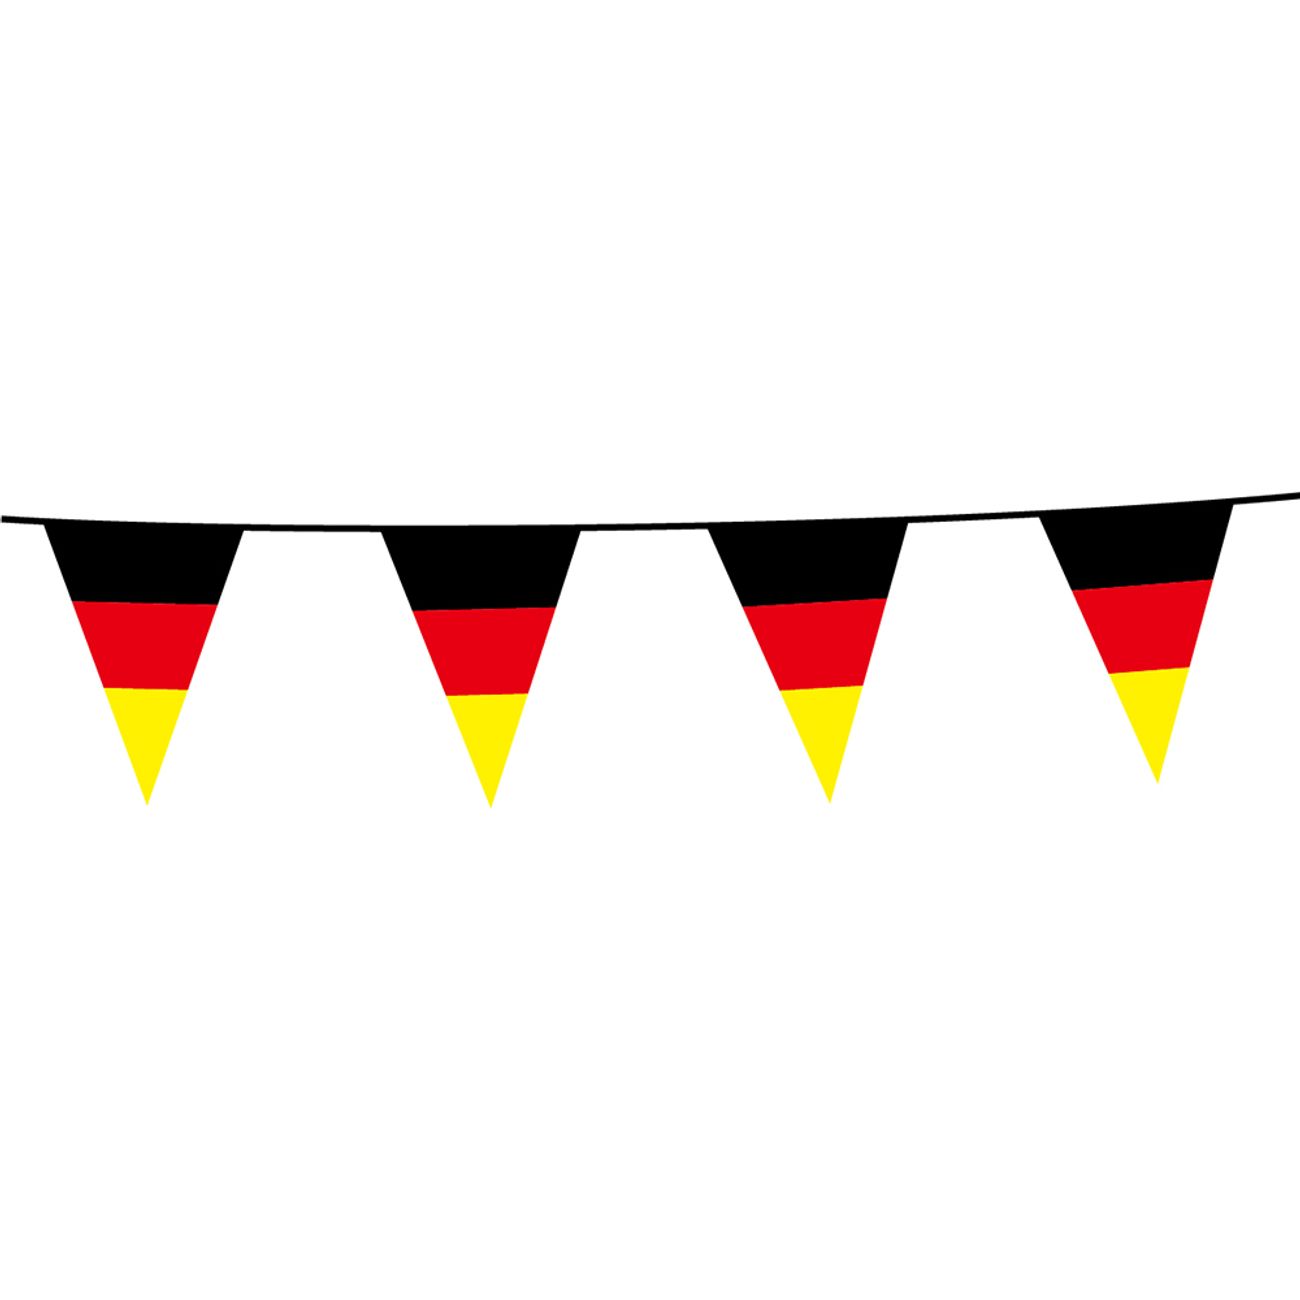 flaggirlang-tyskland-87007-1